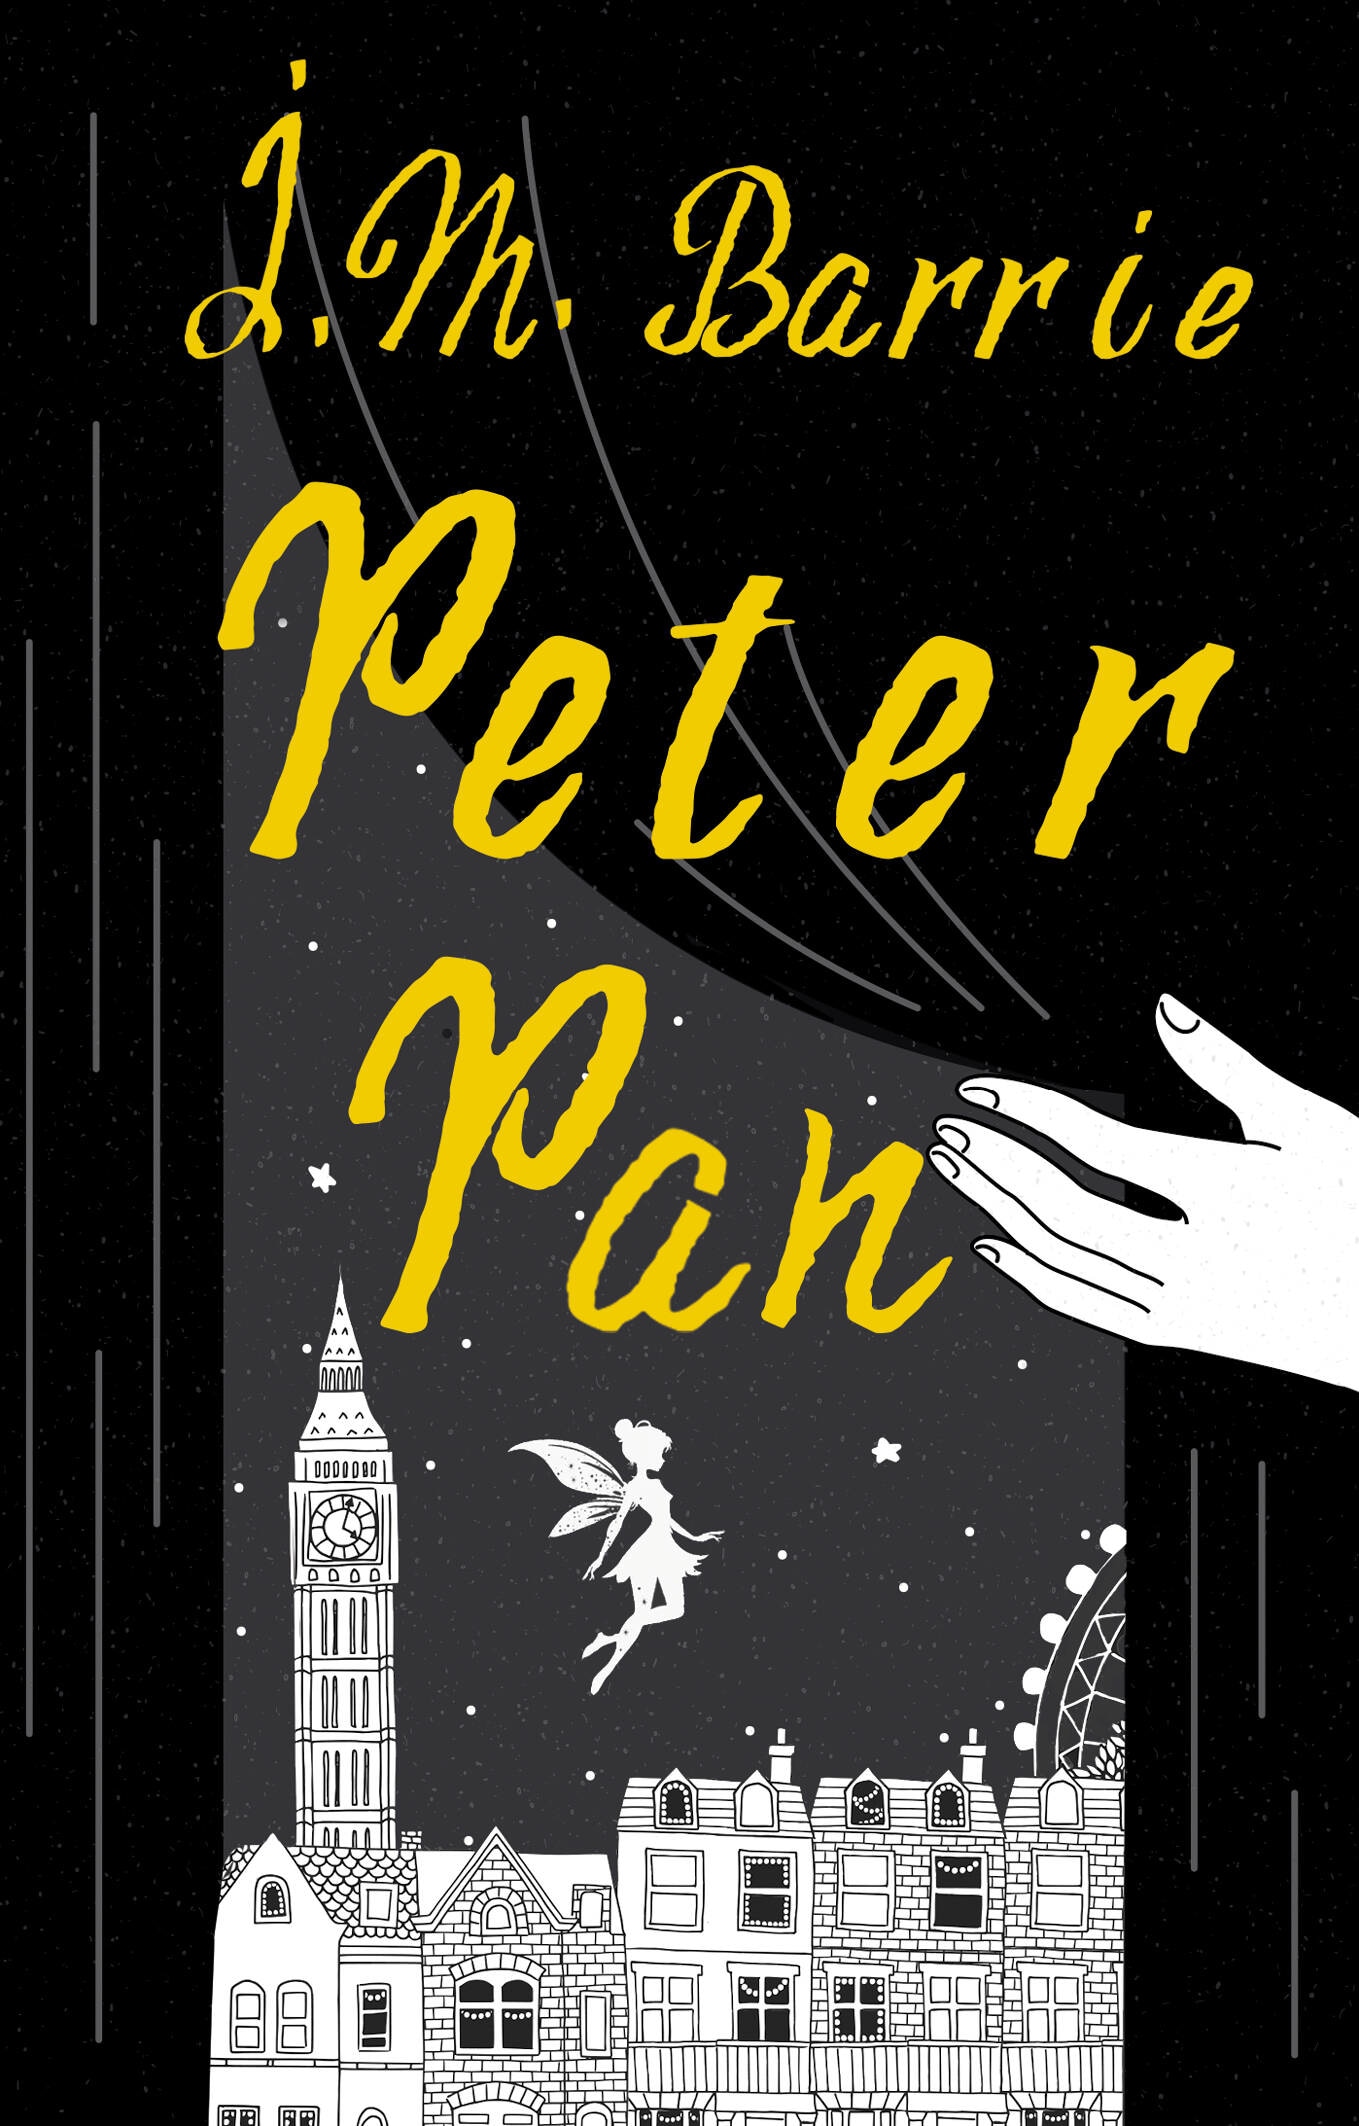 Book “Peter Pan” by Джеймс Барри — 2023